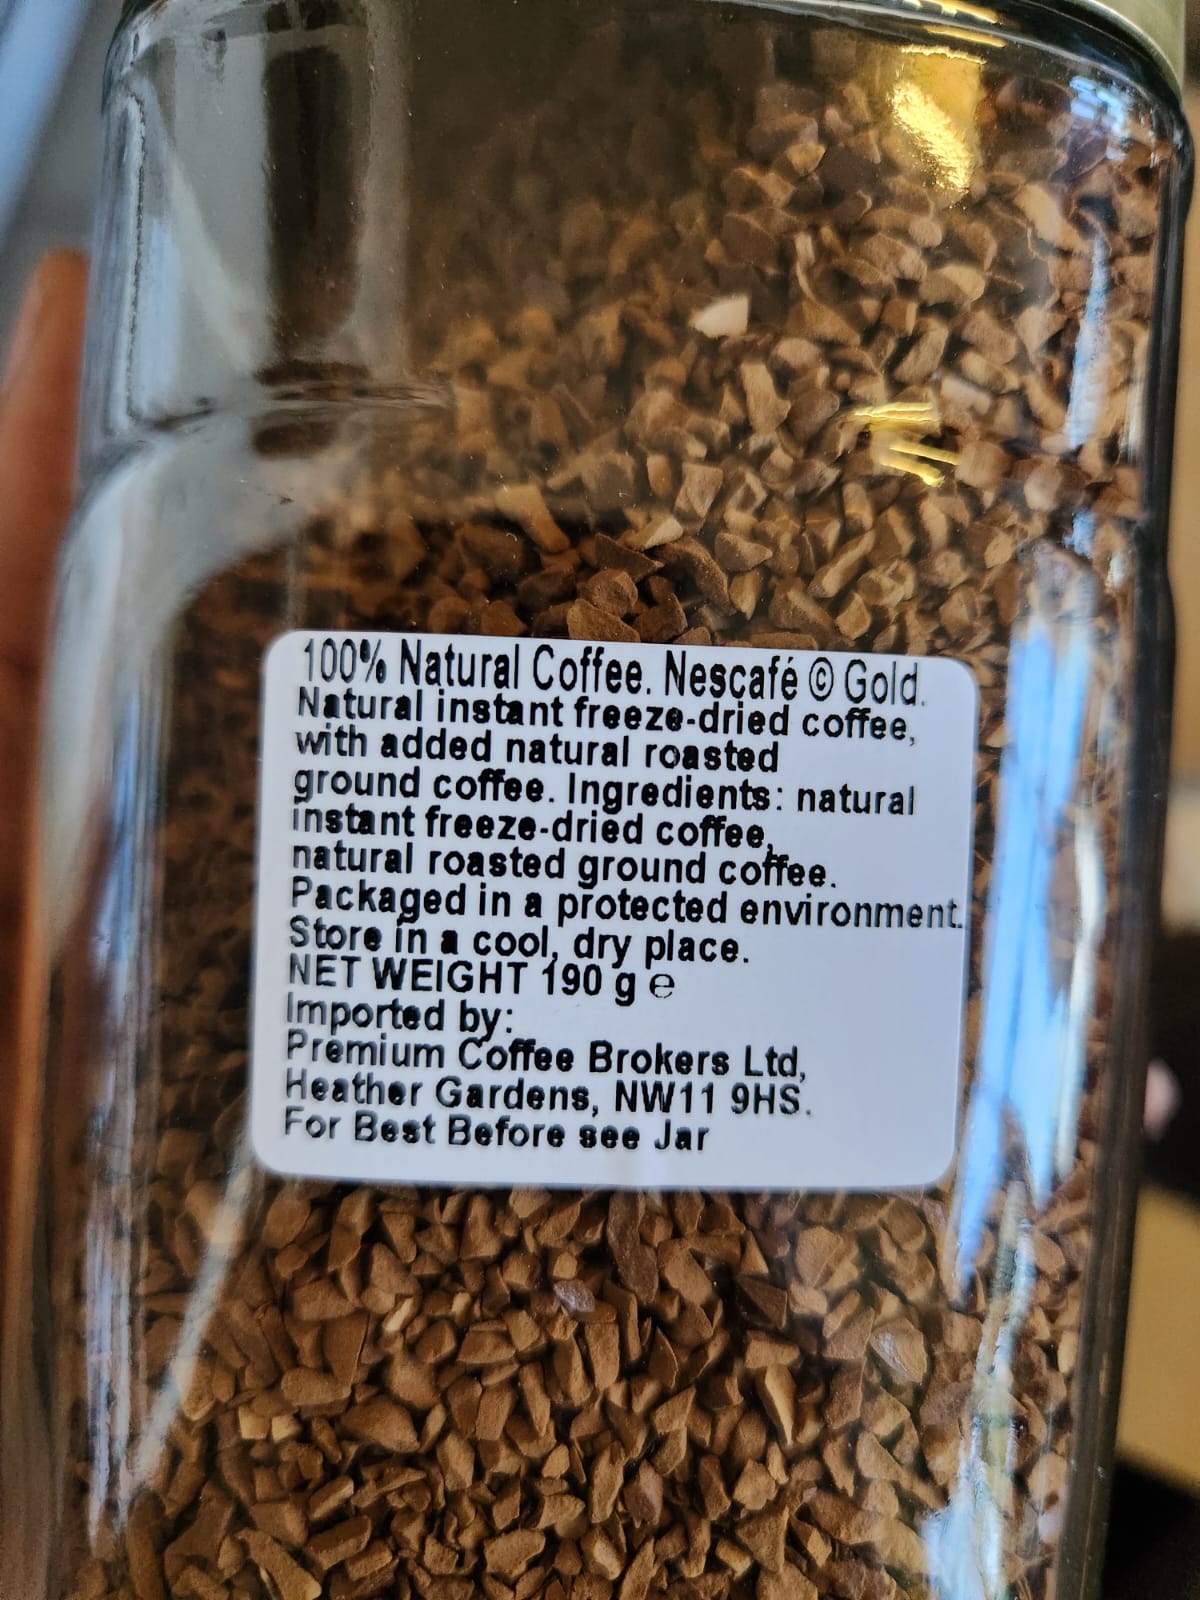 NESCAFE Gold Coffee, 190g